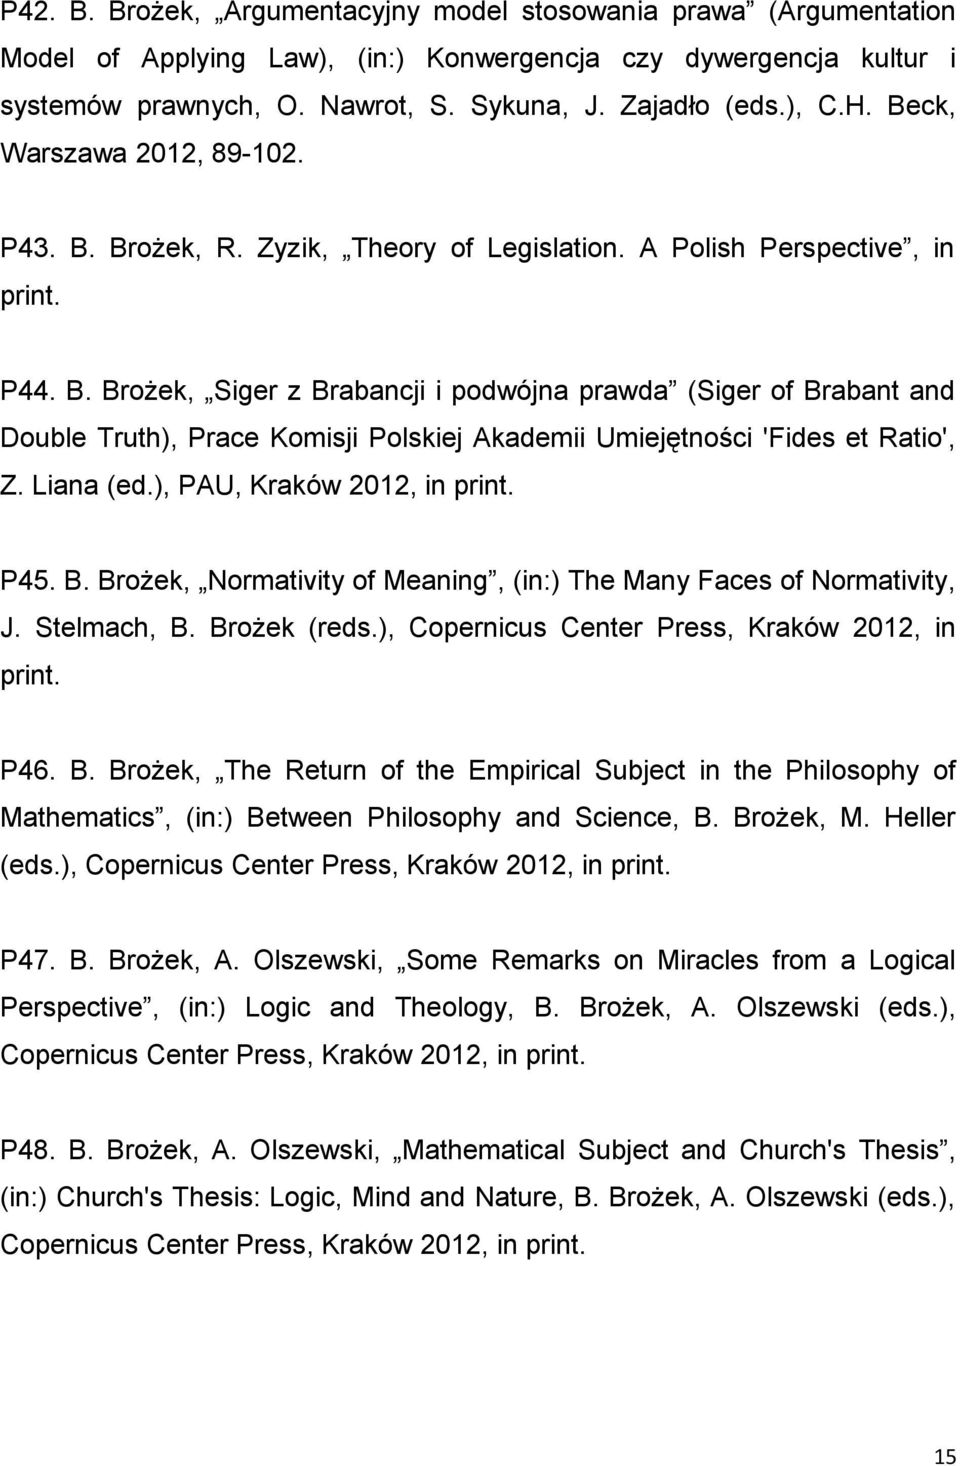 Liana (ed.), PAU, Kraków 2012, in print. P45. B. Brożek, Normativity of Meaning, (in:) The Many Faces of Normativity, J. Stelmach, B. Brożek (reds.), Copernicus Center Press, Kraków 2012, in print.